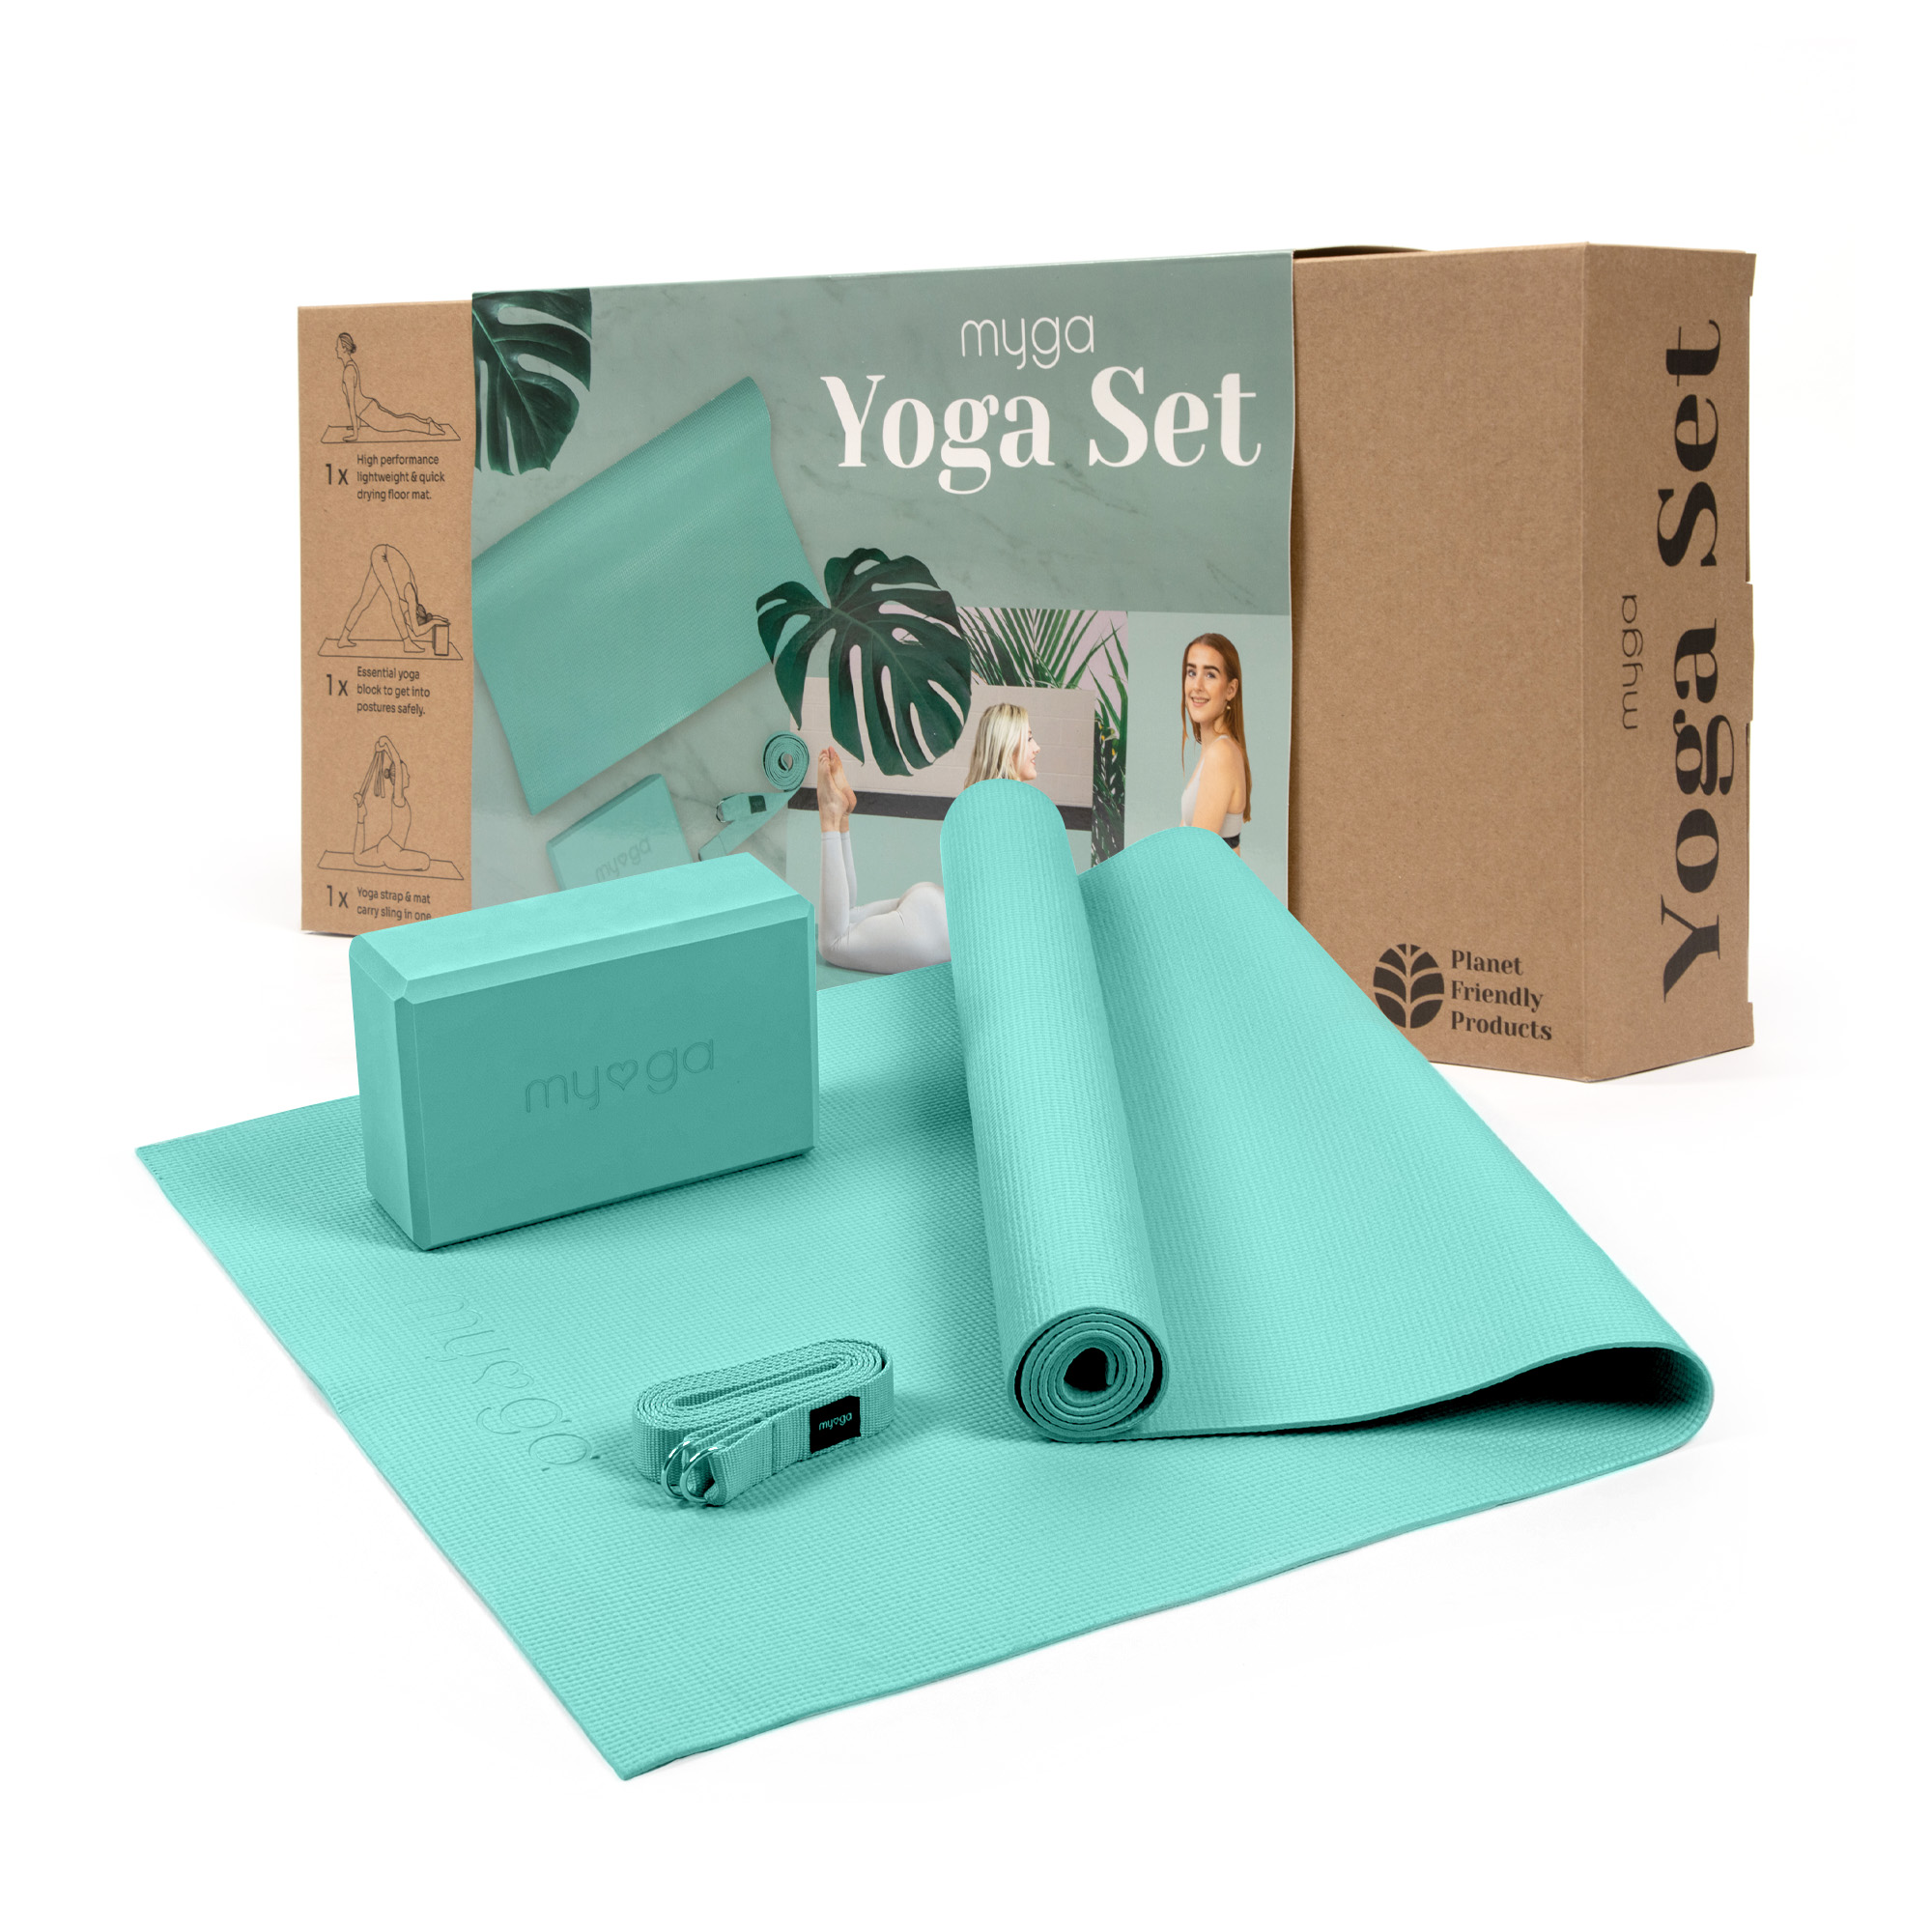    Myga Yoga Starter Set RY889 